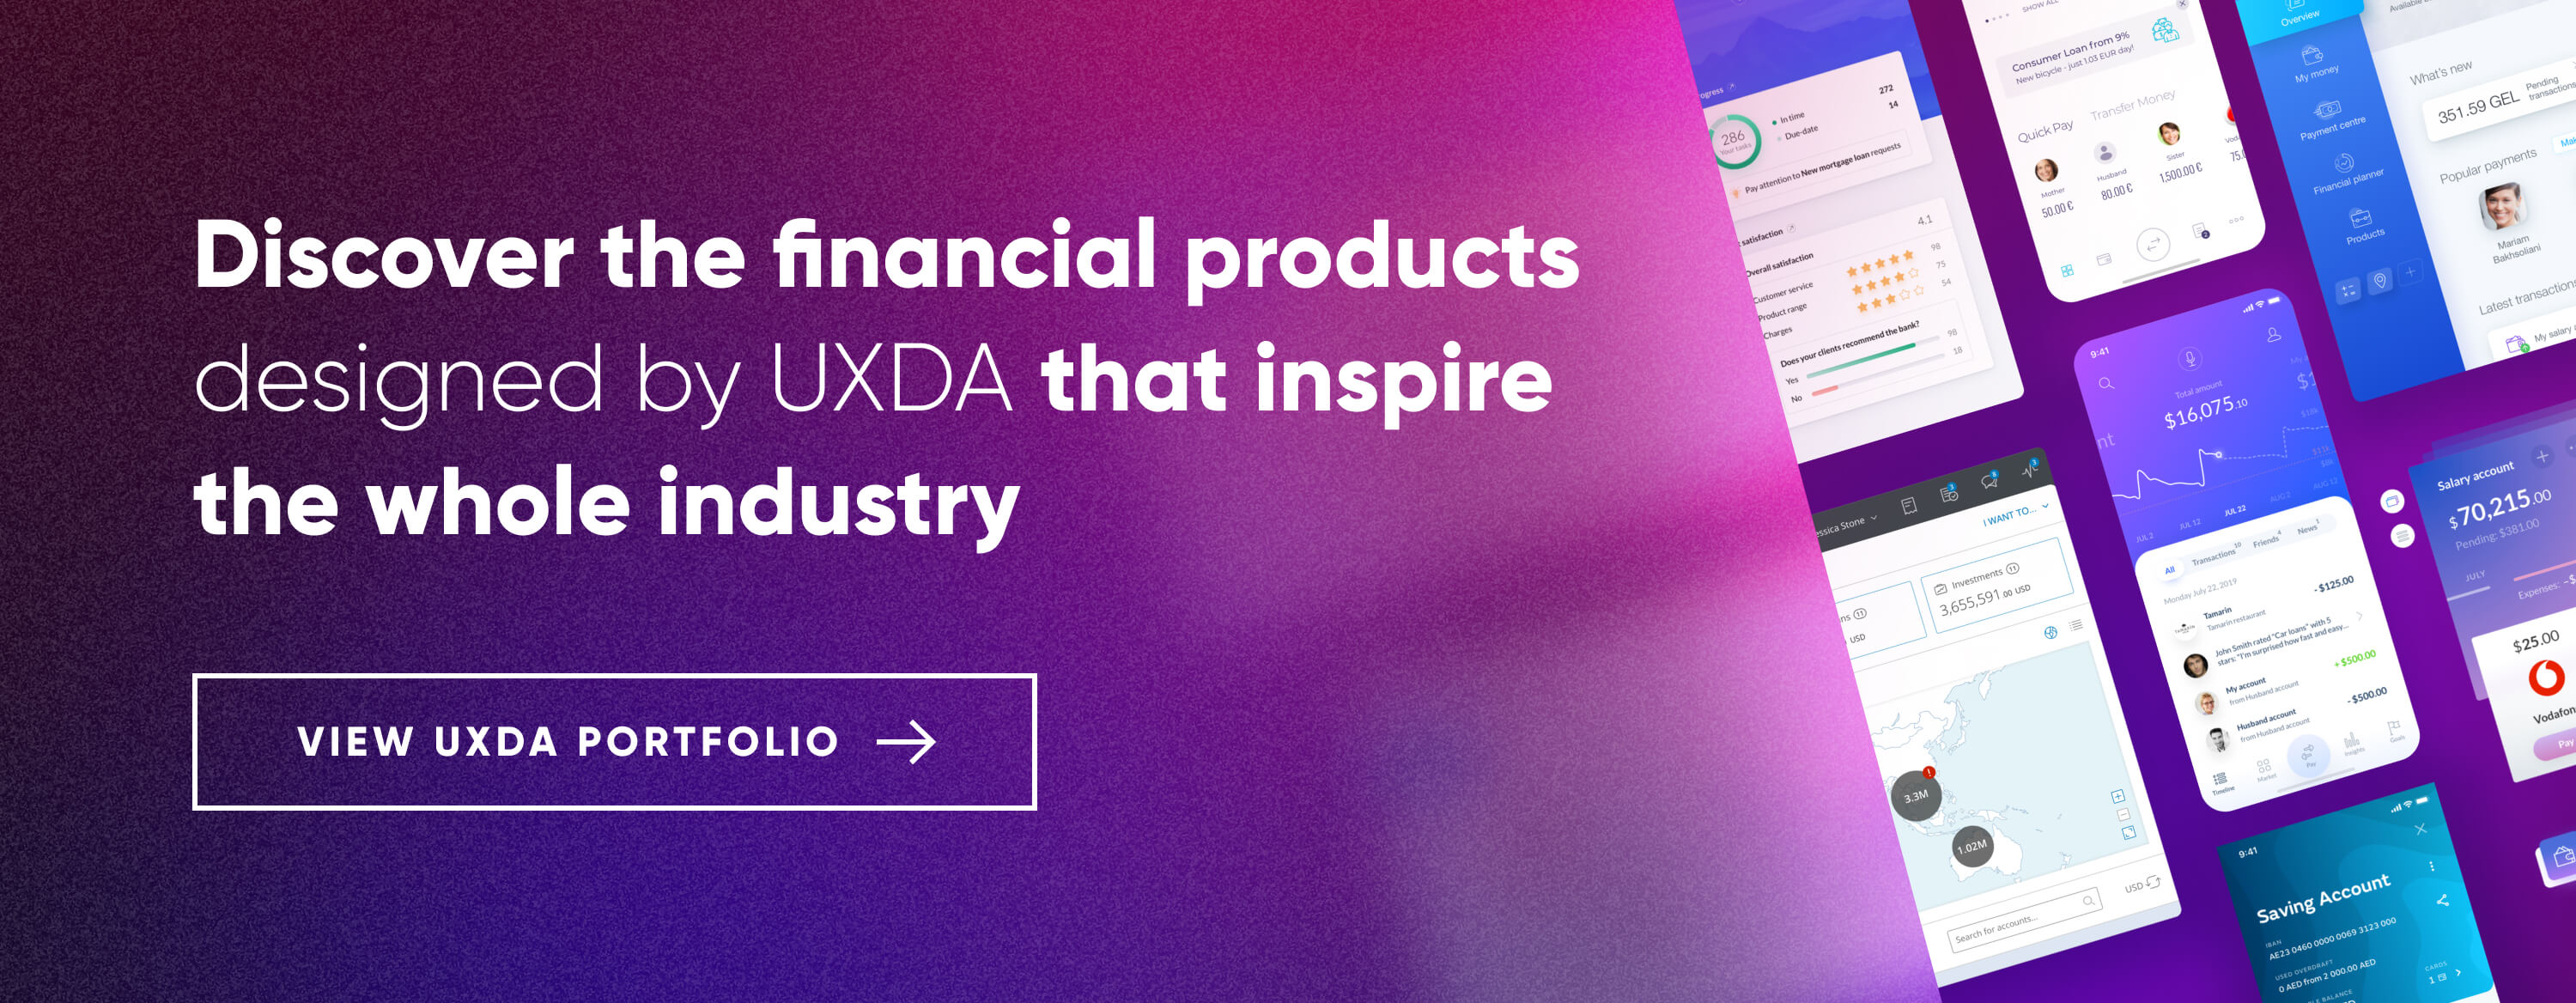 uxda-portfolio-financial-digital-product-inspire-industry-ux-1667397200.jpg